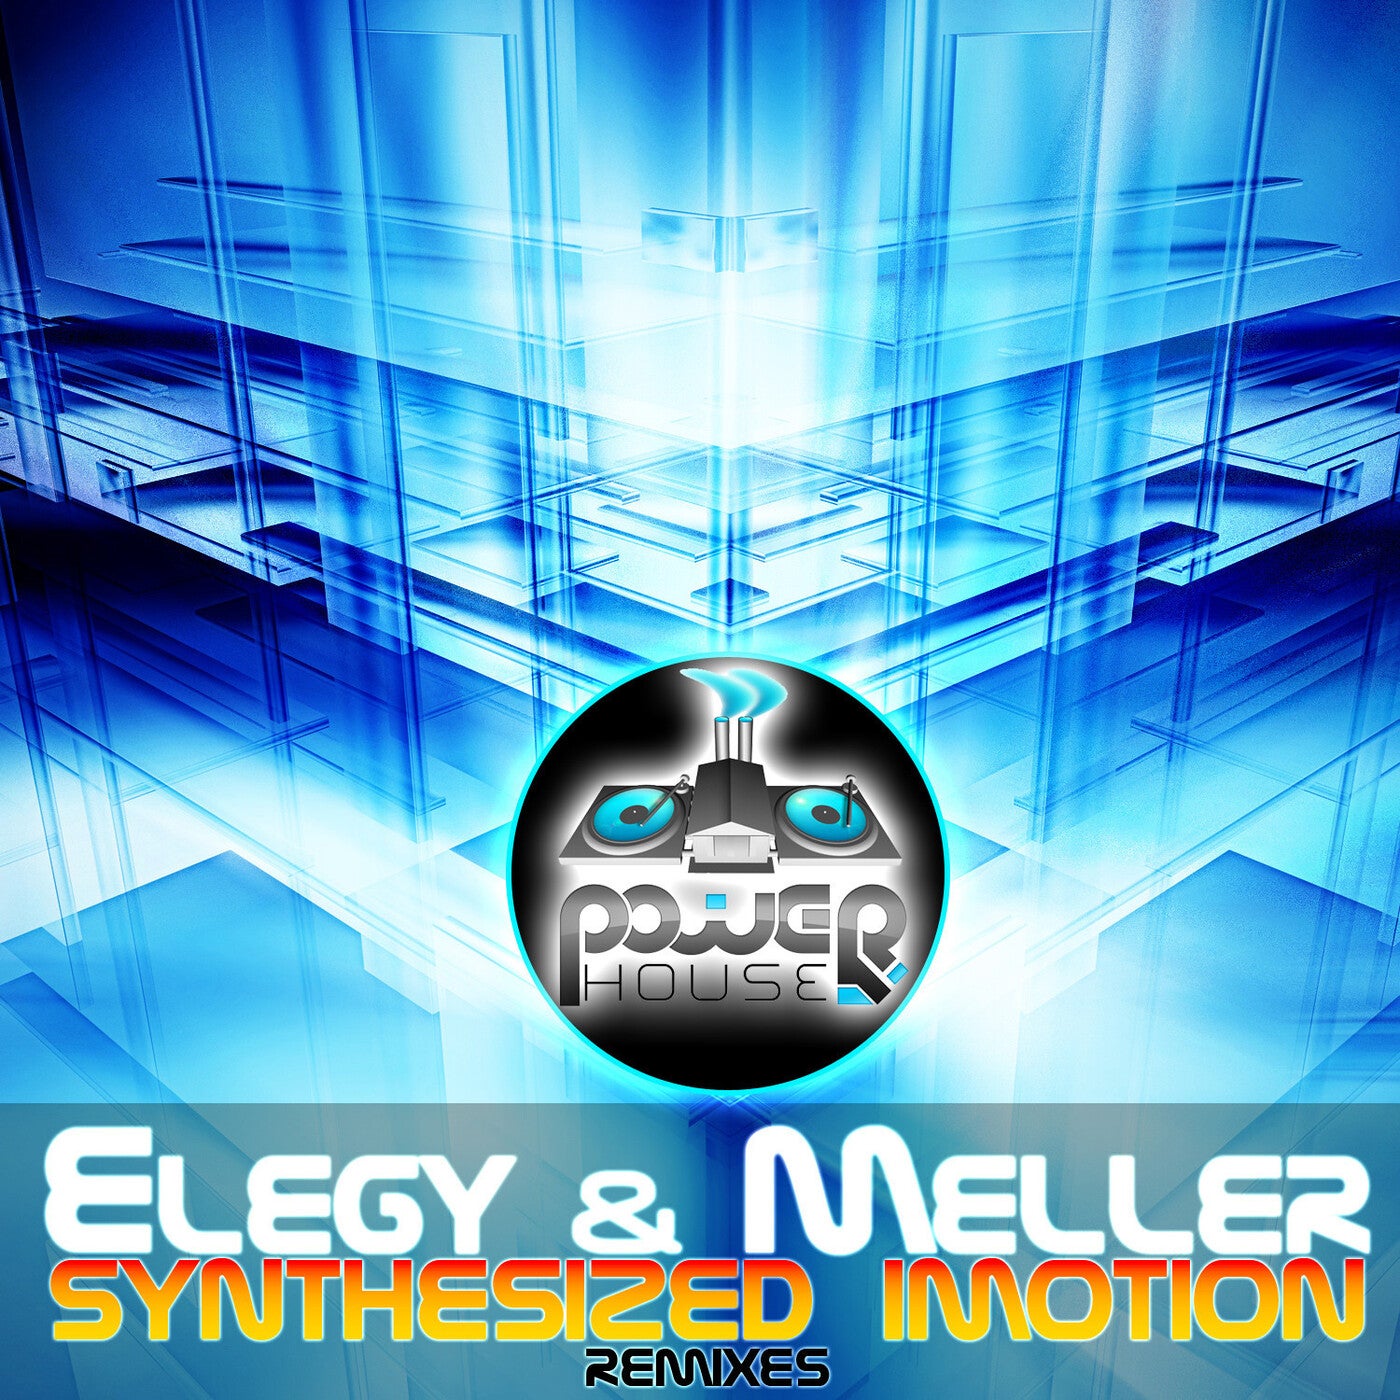 Synthesized Imotion Remixes